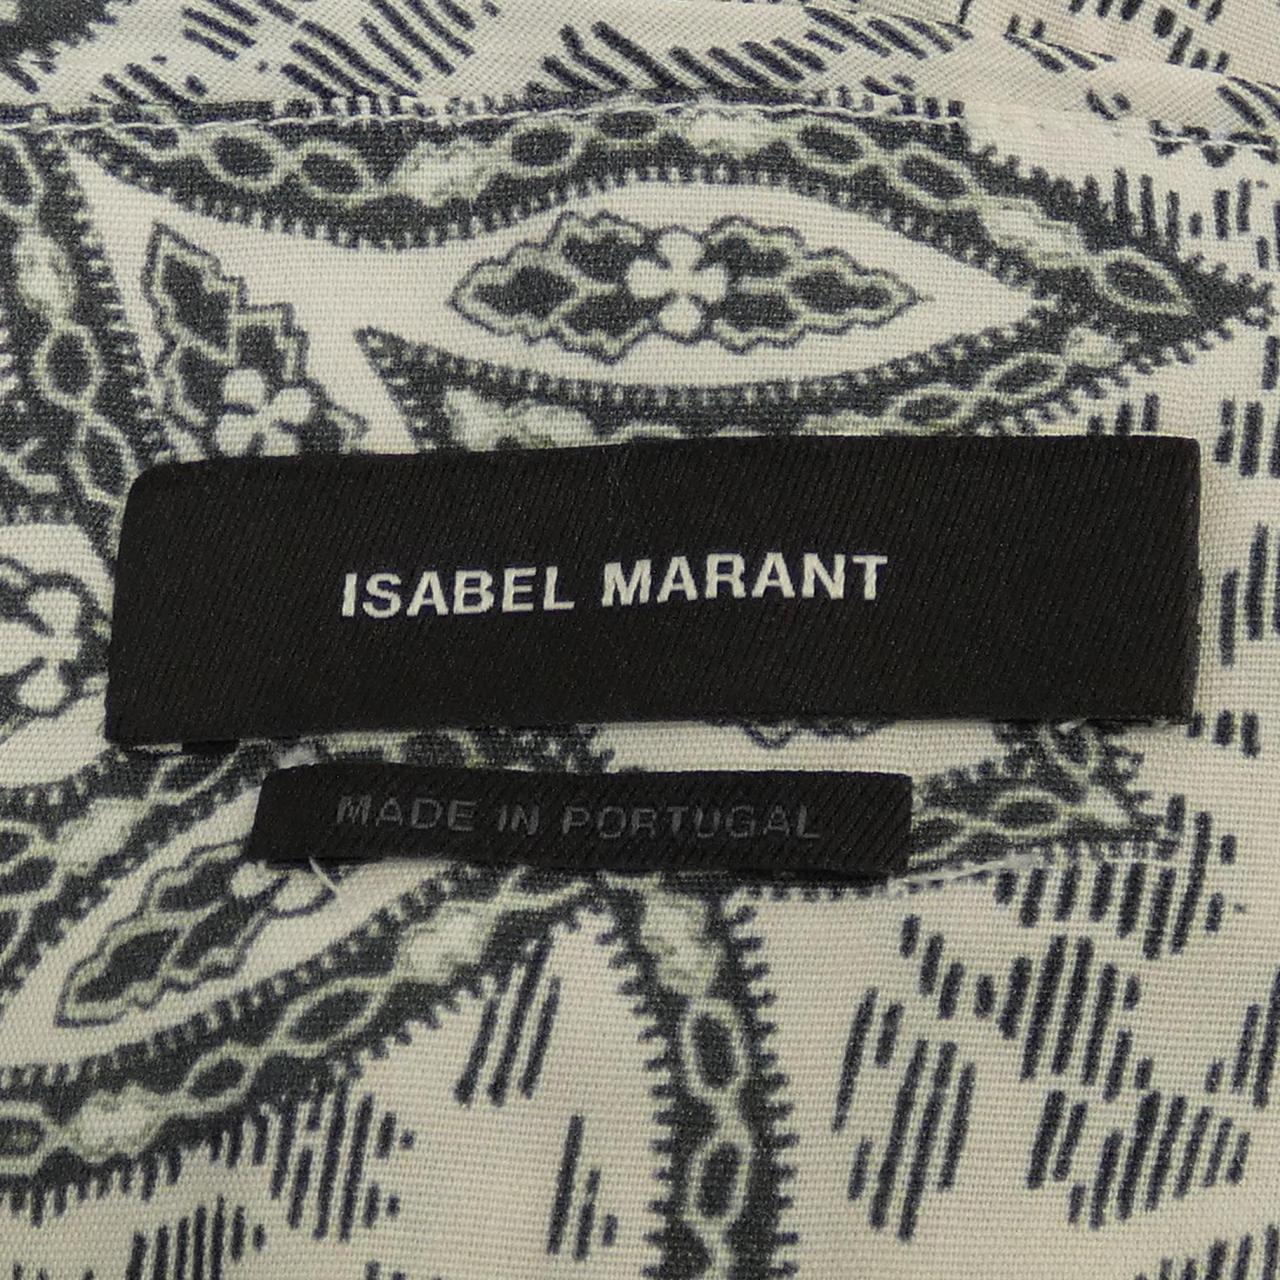 ISABEL MARANT伊莎貝爾·馬蘭特 半身裙